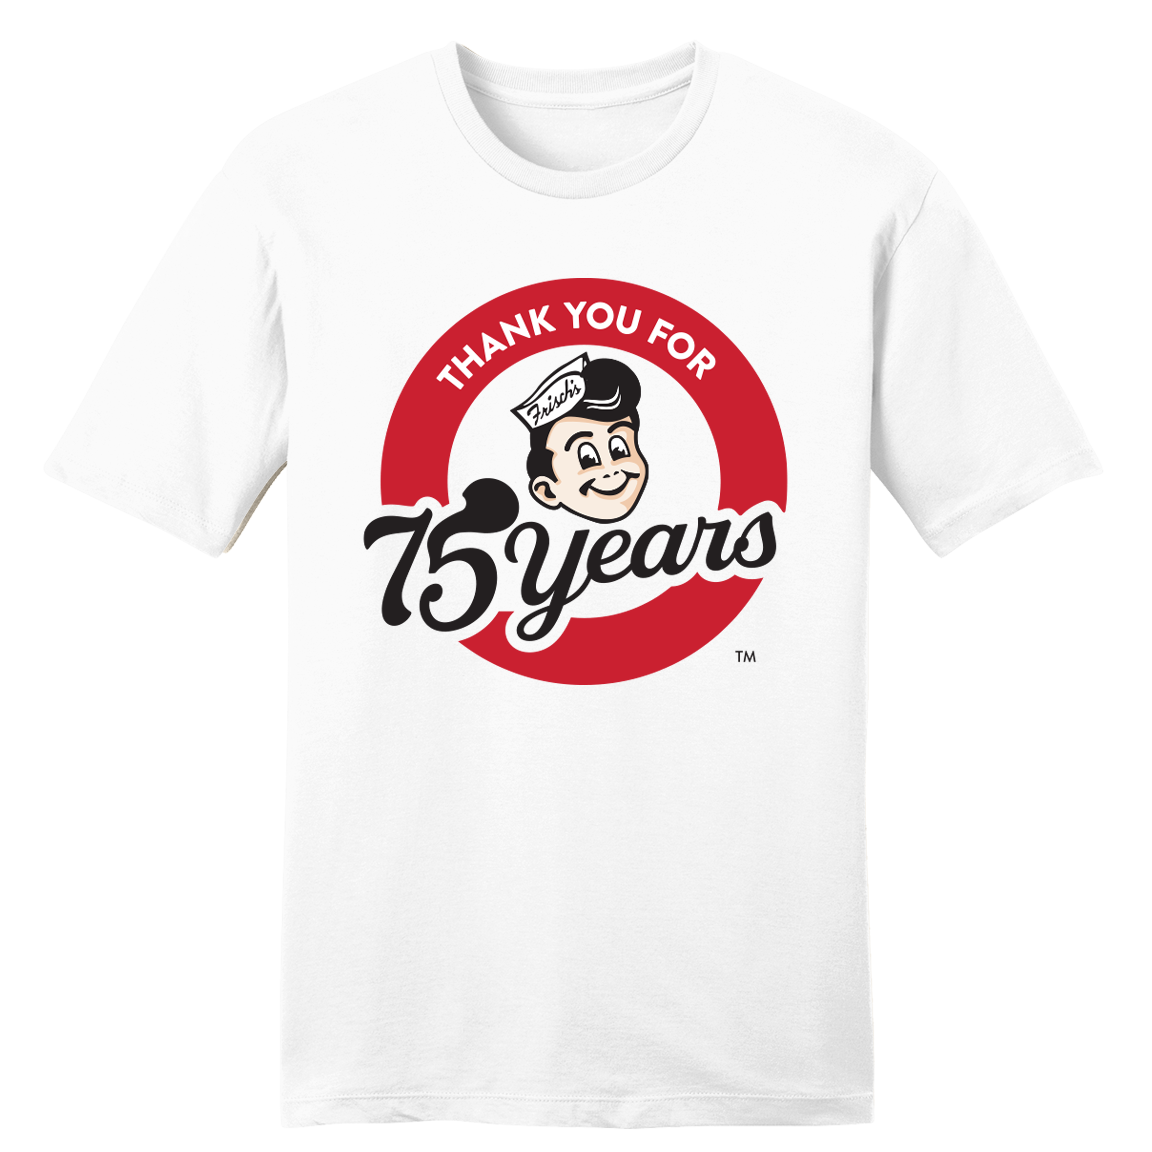 Frisch's 75 Years - Old School Shirts